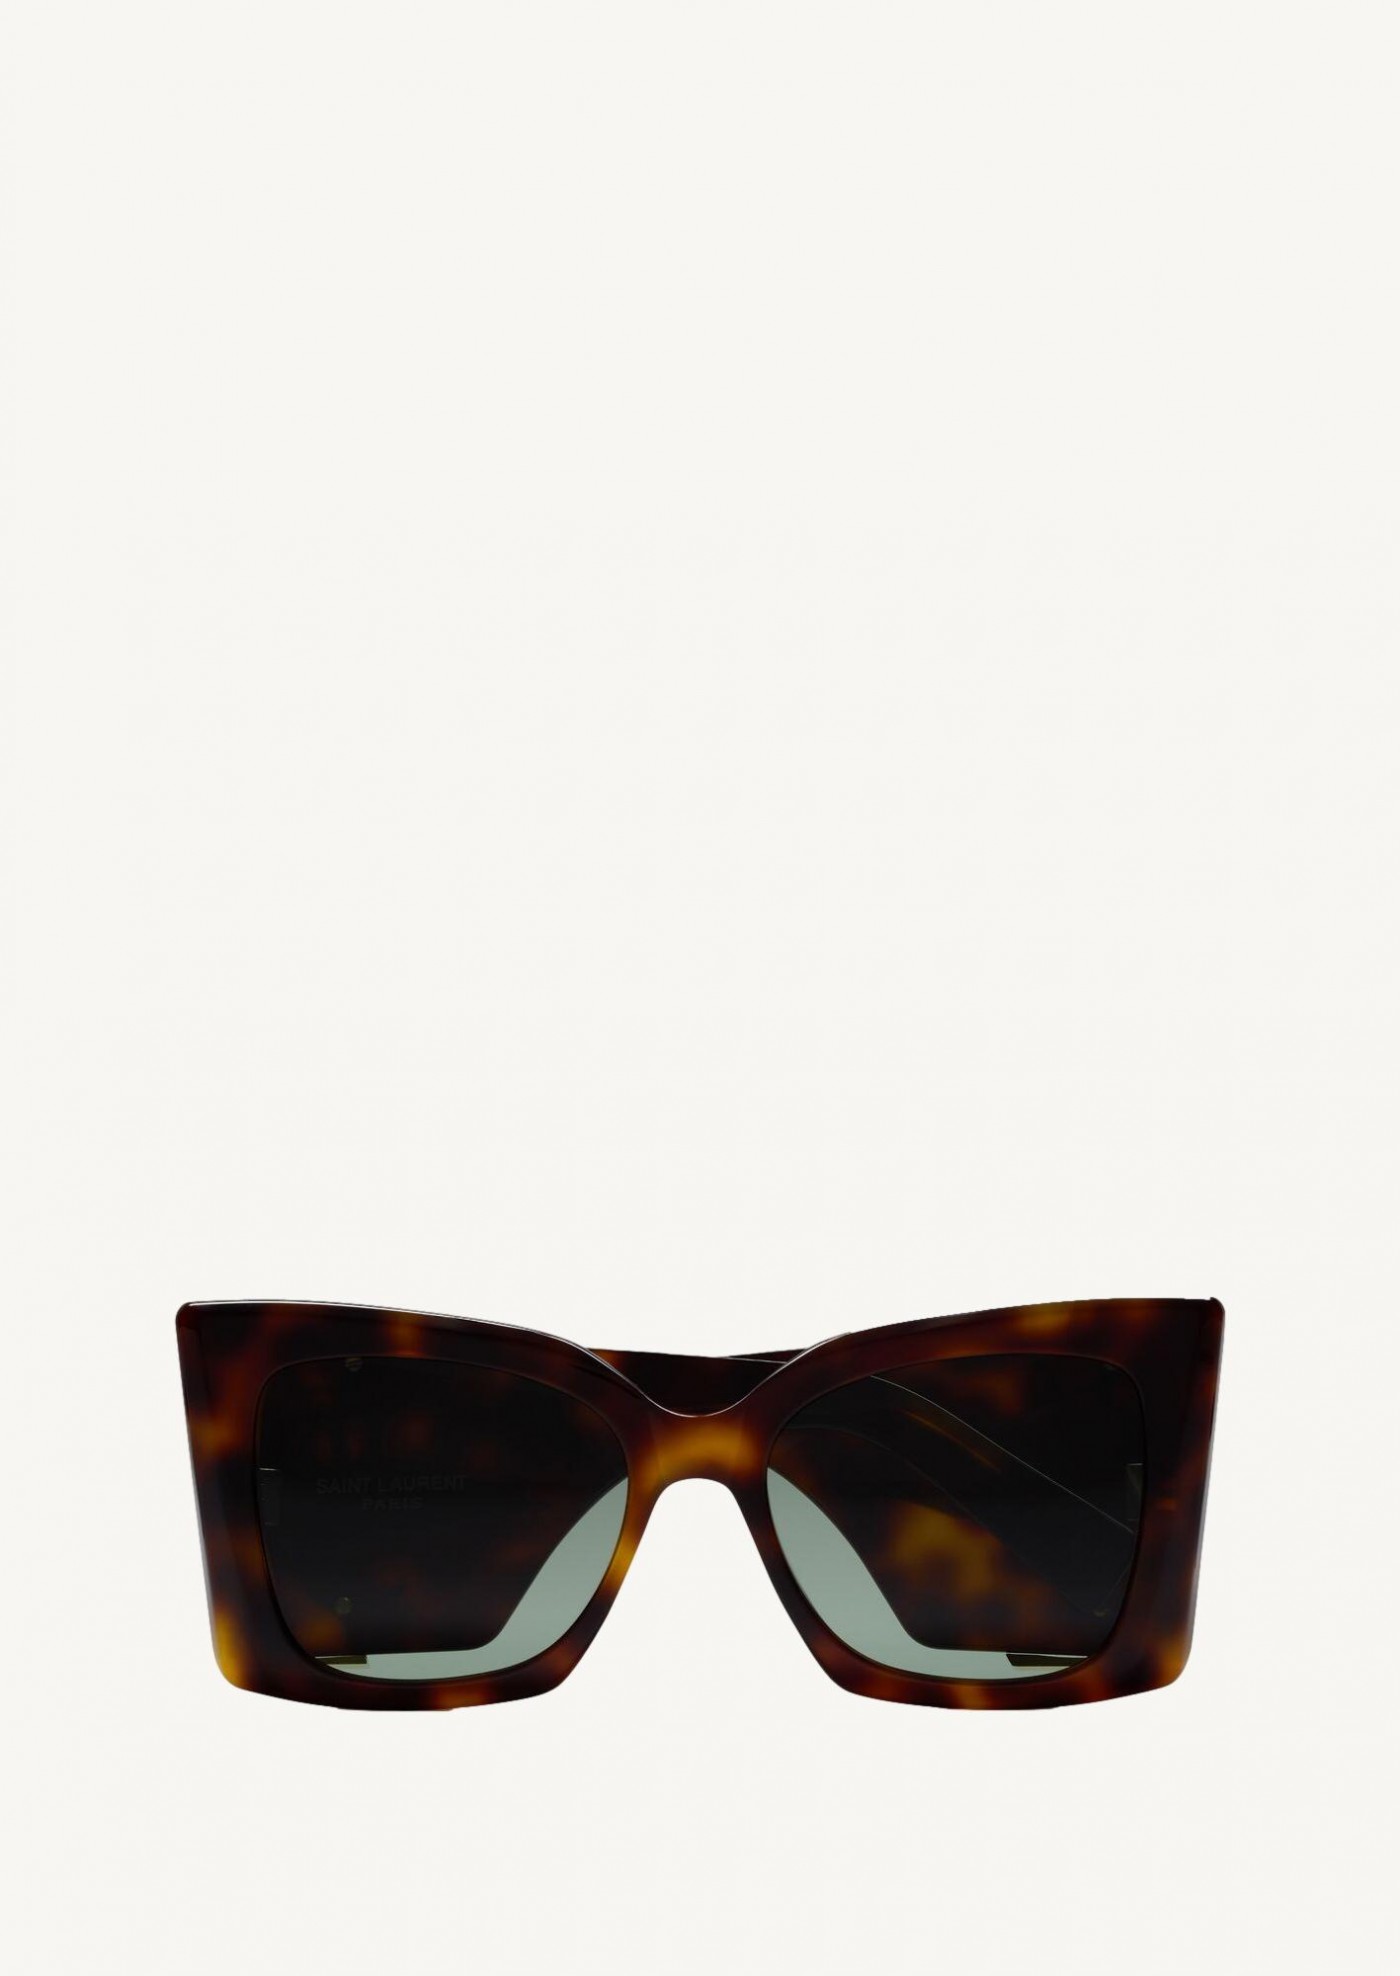 Sunglasses sl m119 blaze brown